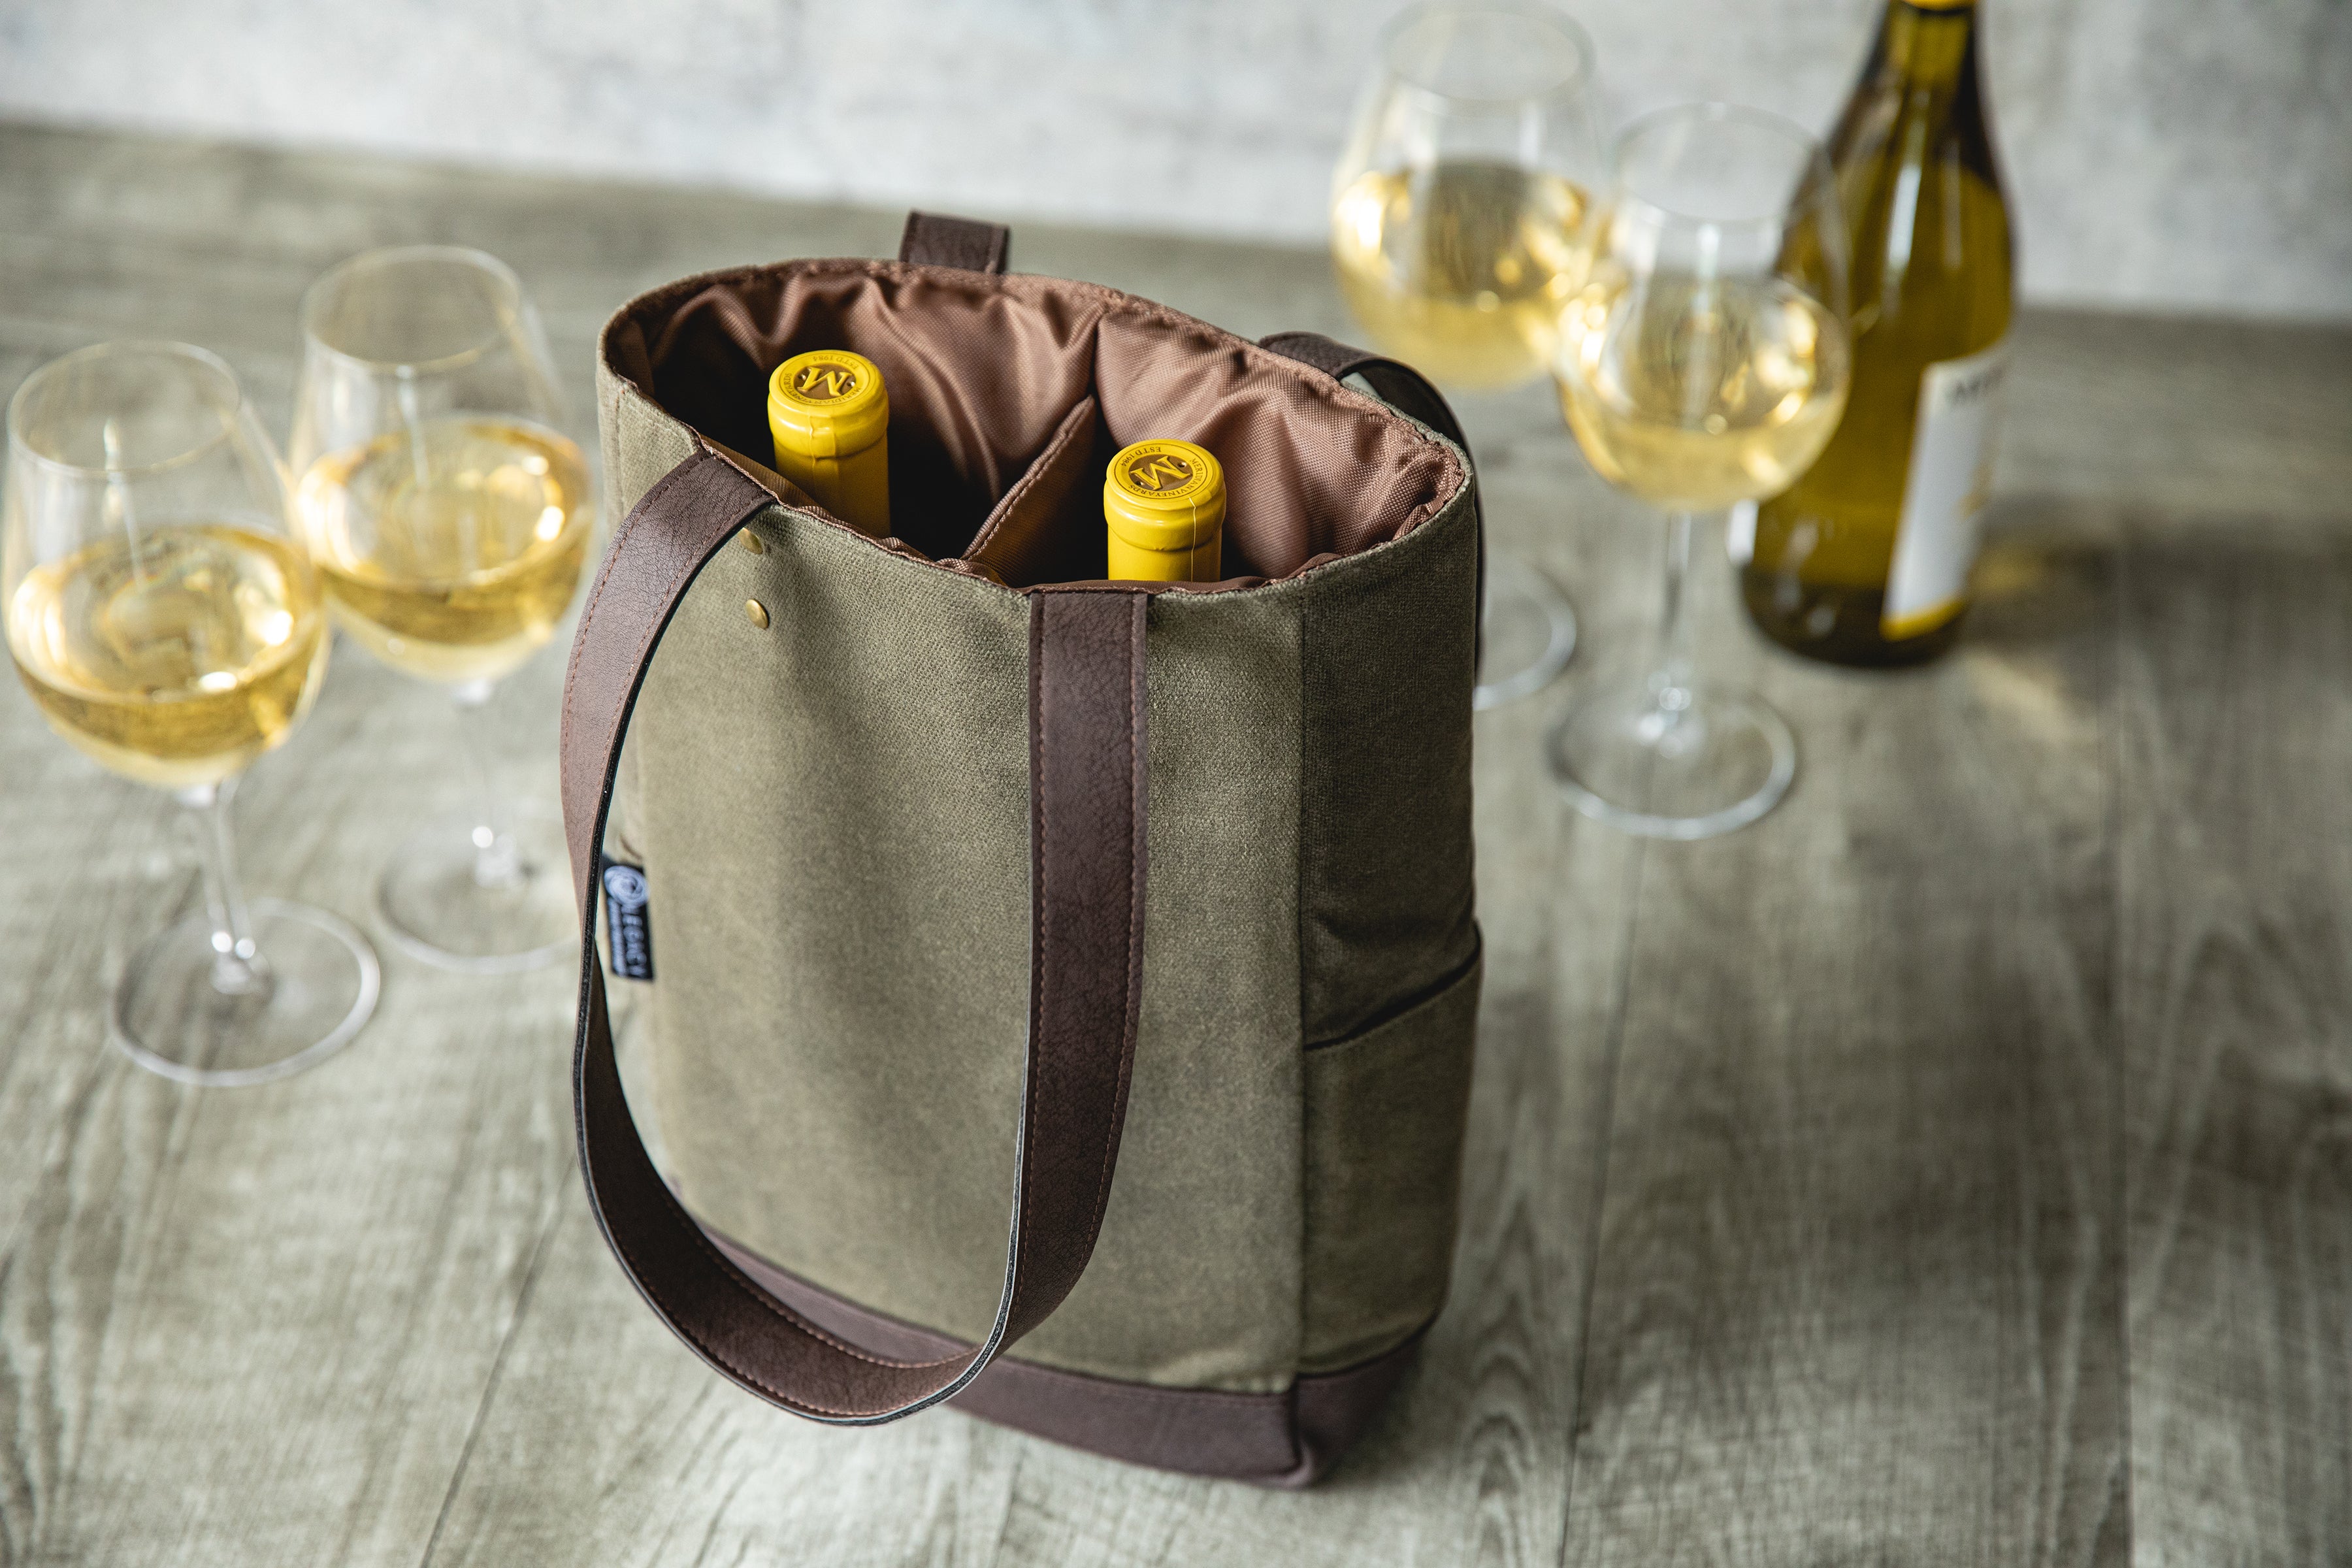 St. Louis Cardinals - 2 Bottle Insulated Wine Cooler Bag